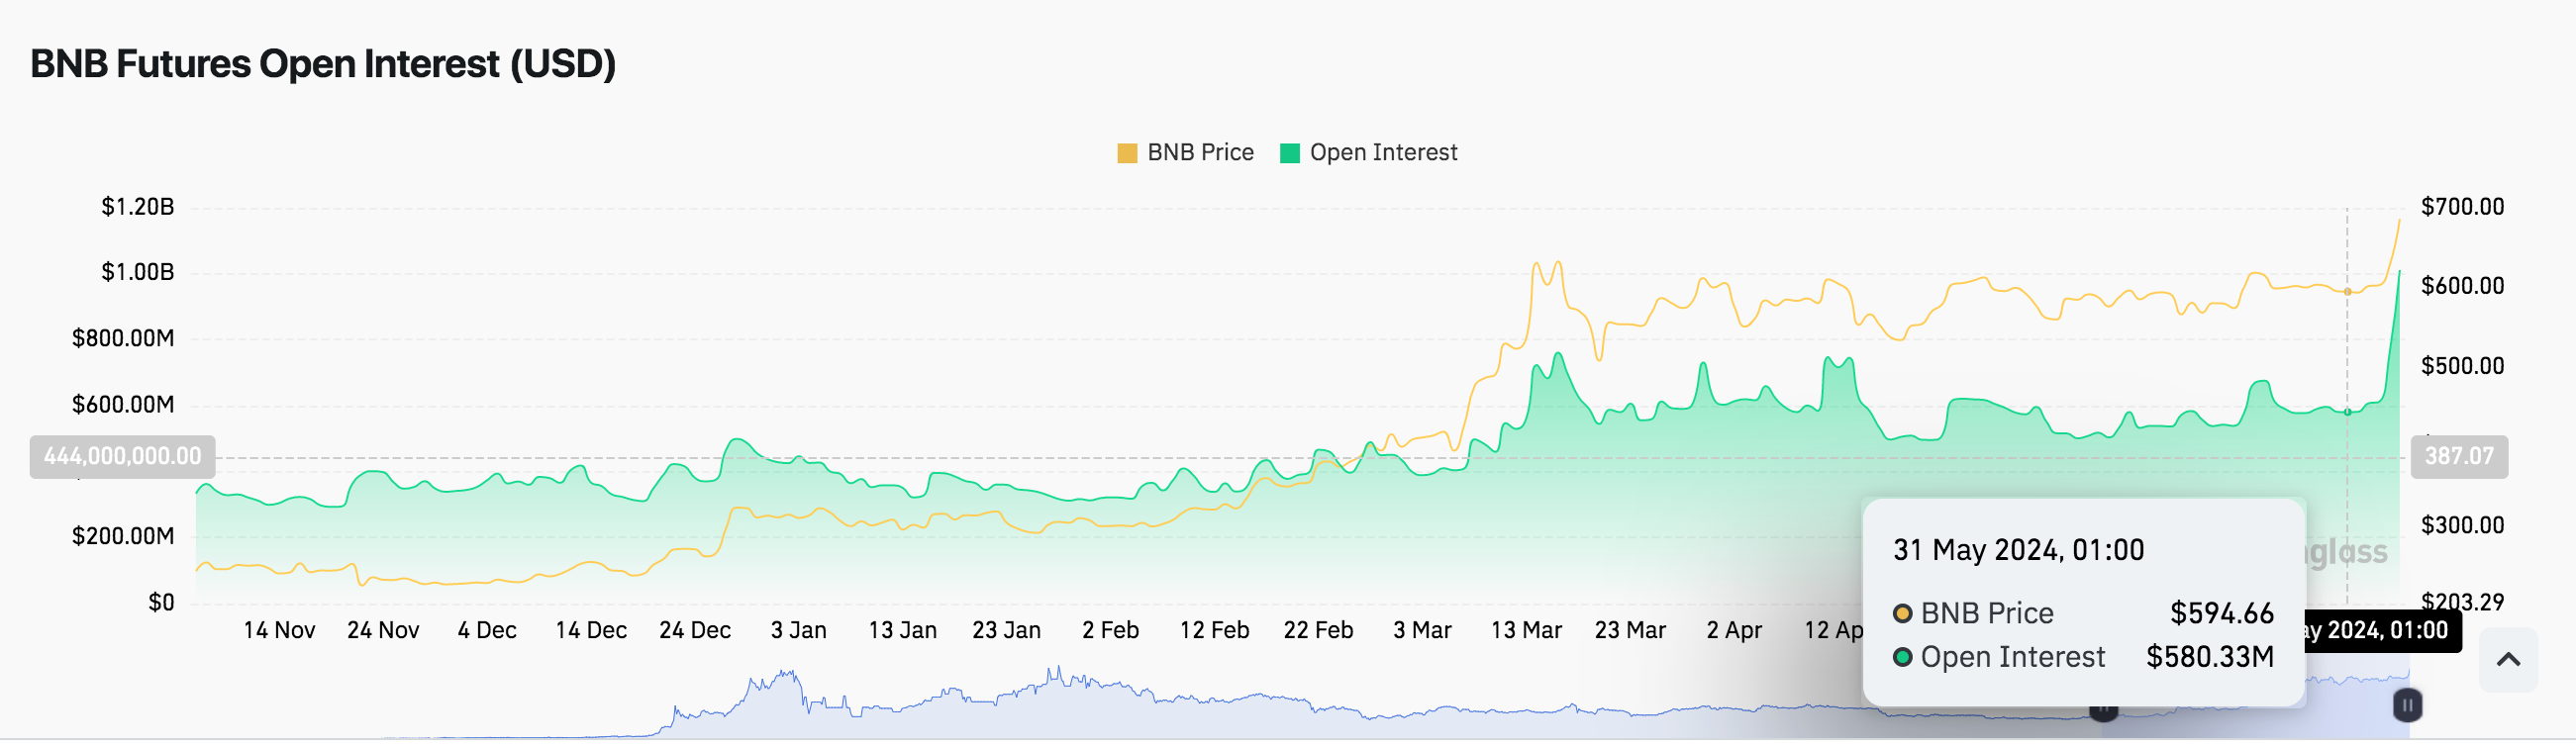 BNB Price vs Open Interest